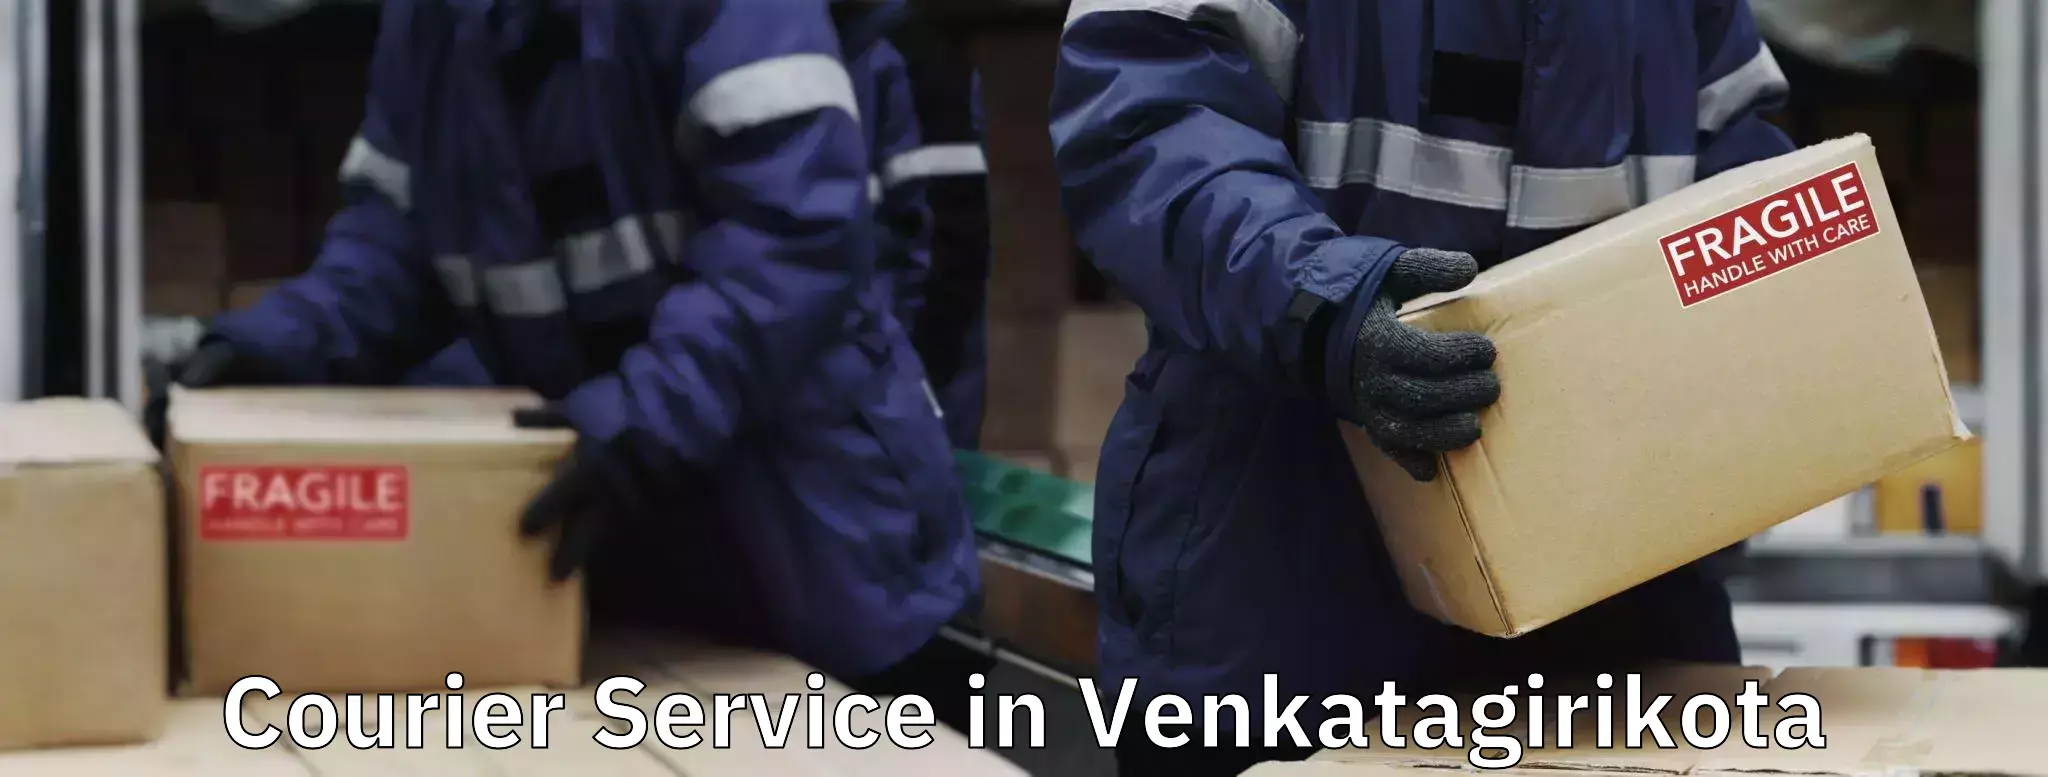 Efficient parcel tracking in Venkatagirikota